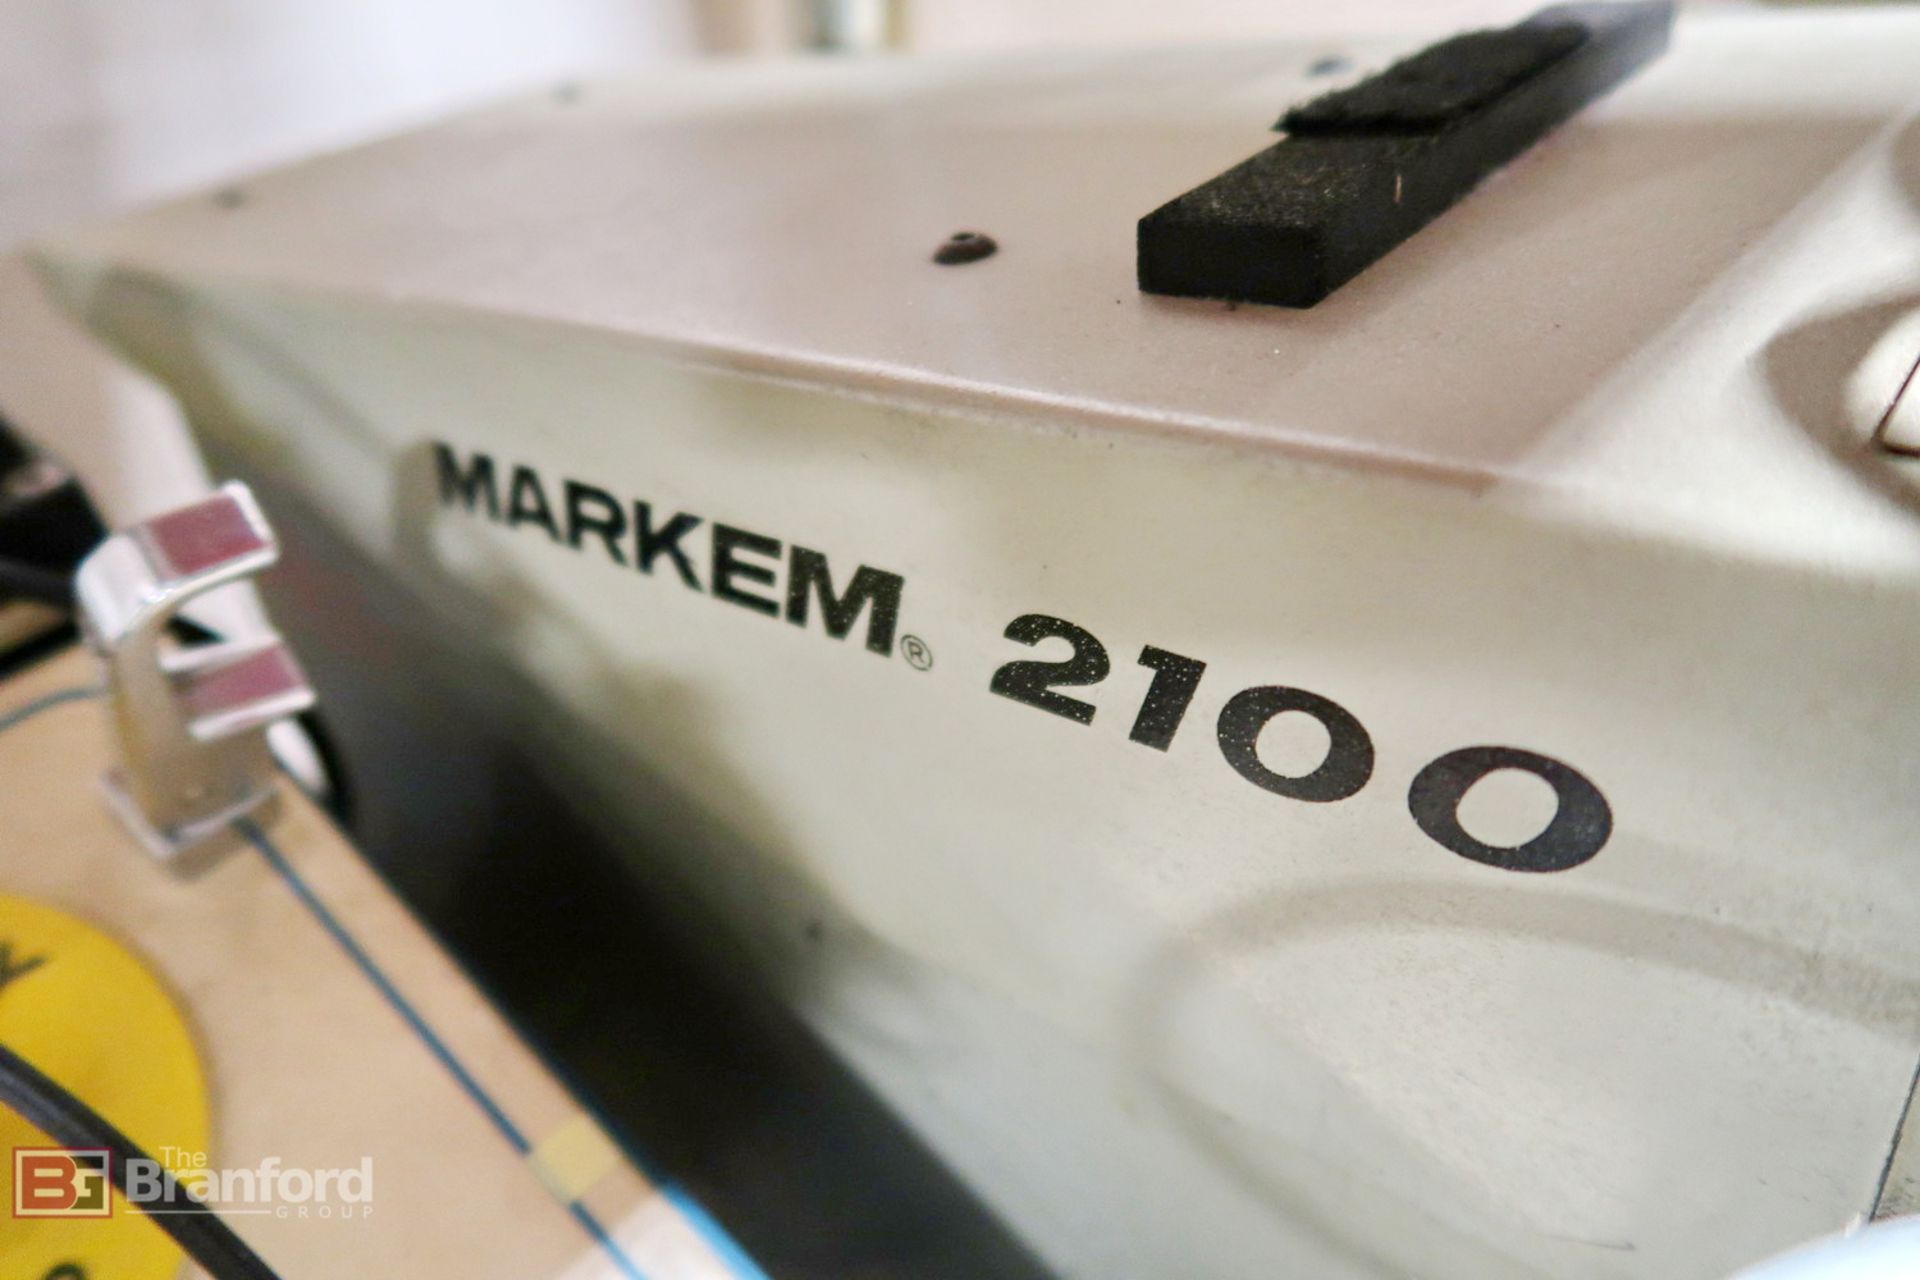 Markem 2100 marking system - Image 3 of 3